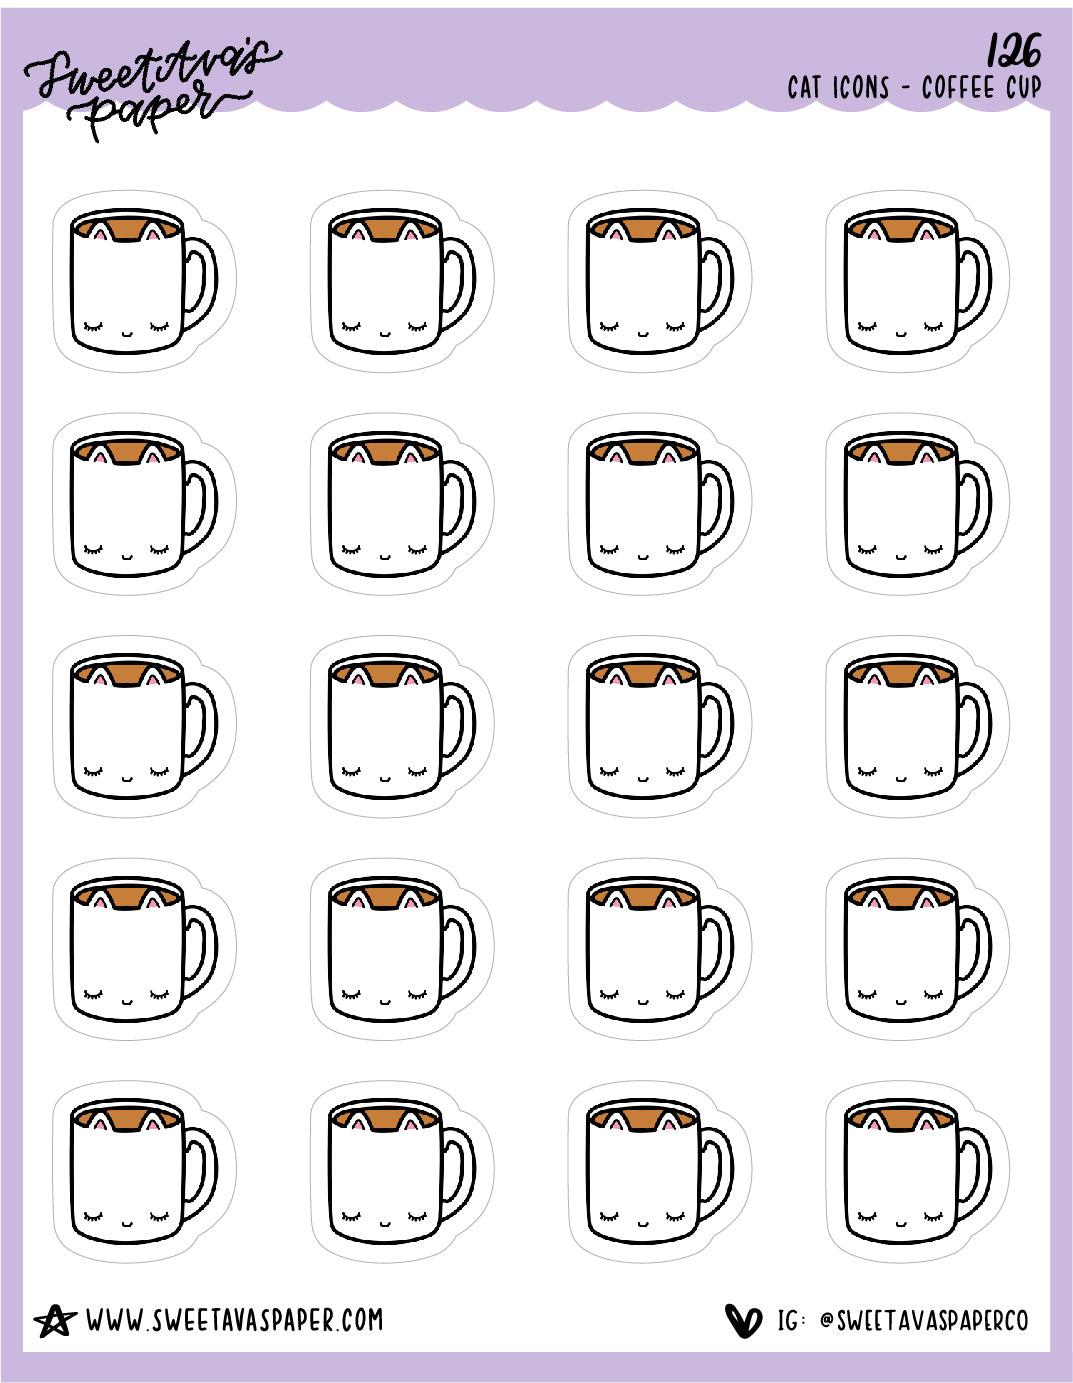 Coffee Mug Stickers - Cat Shaped Icons - [126]